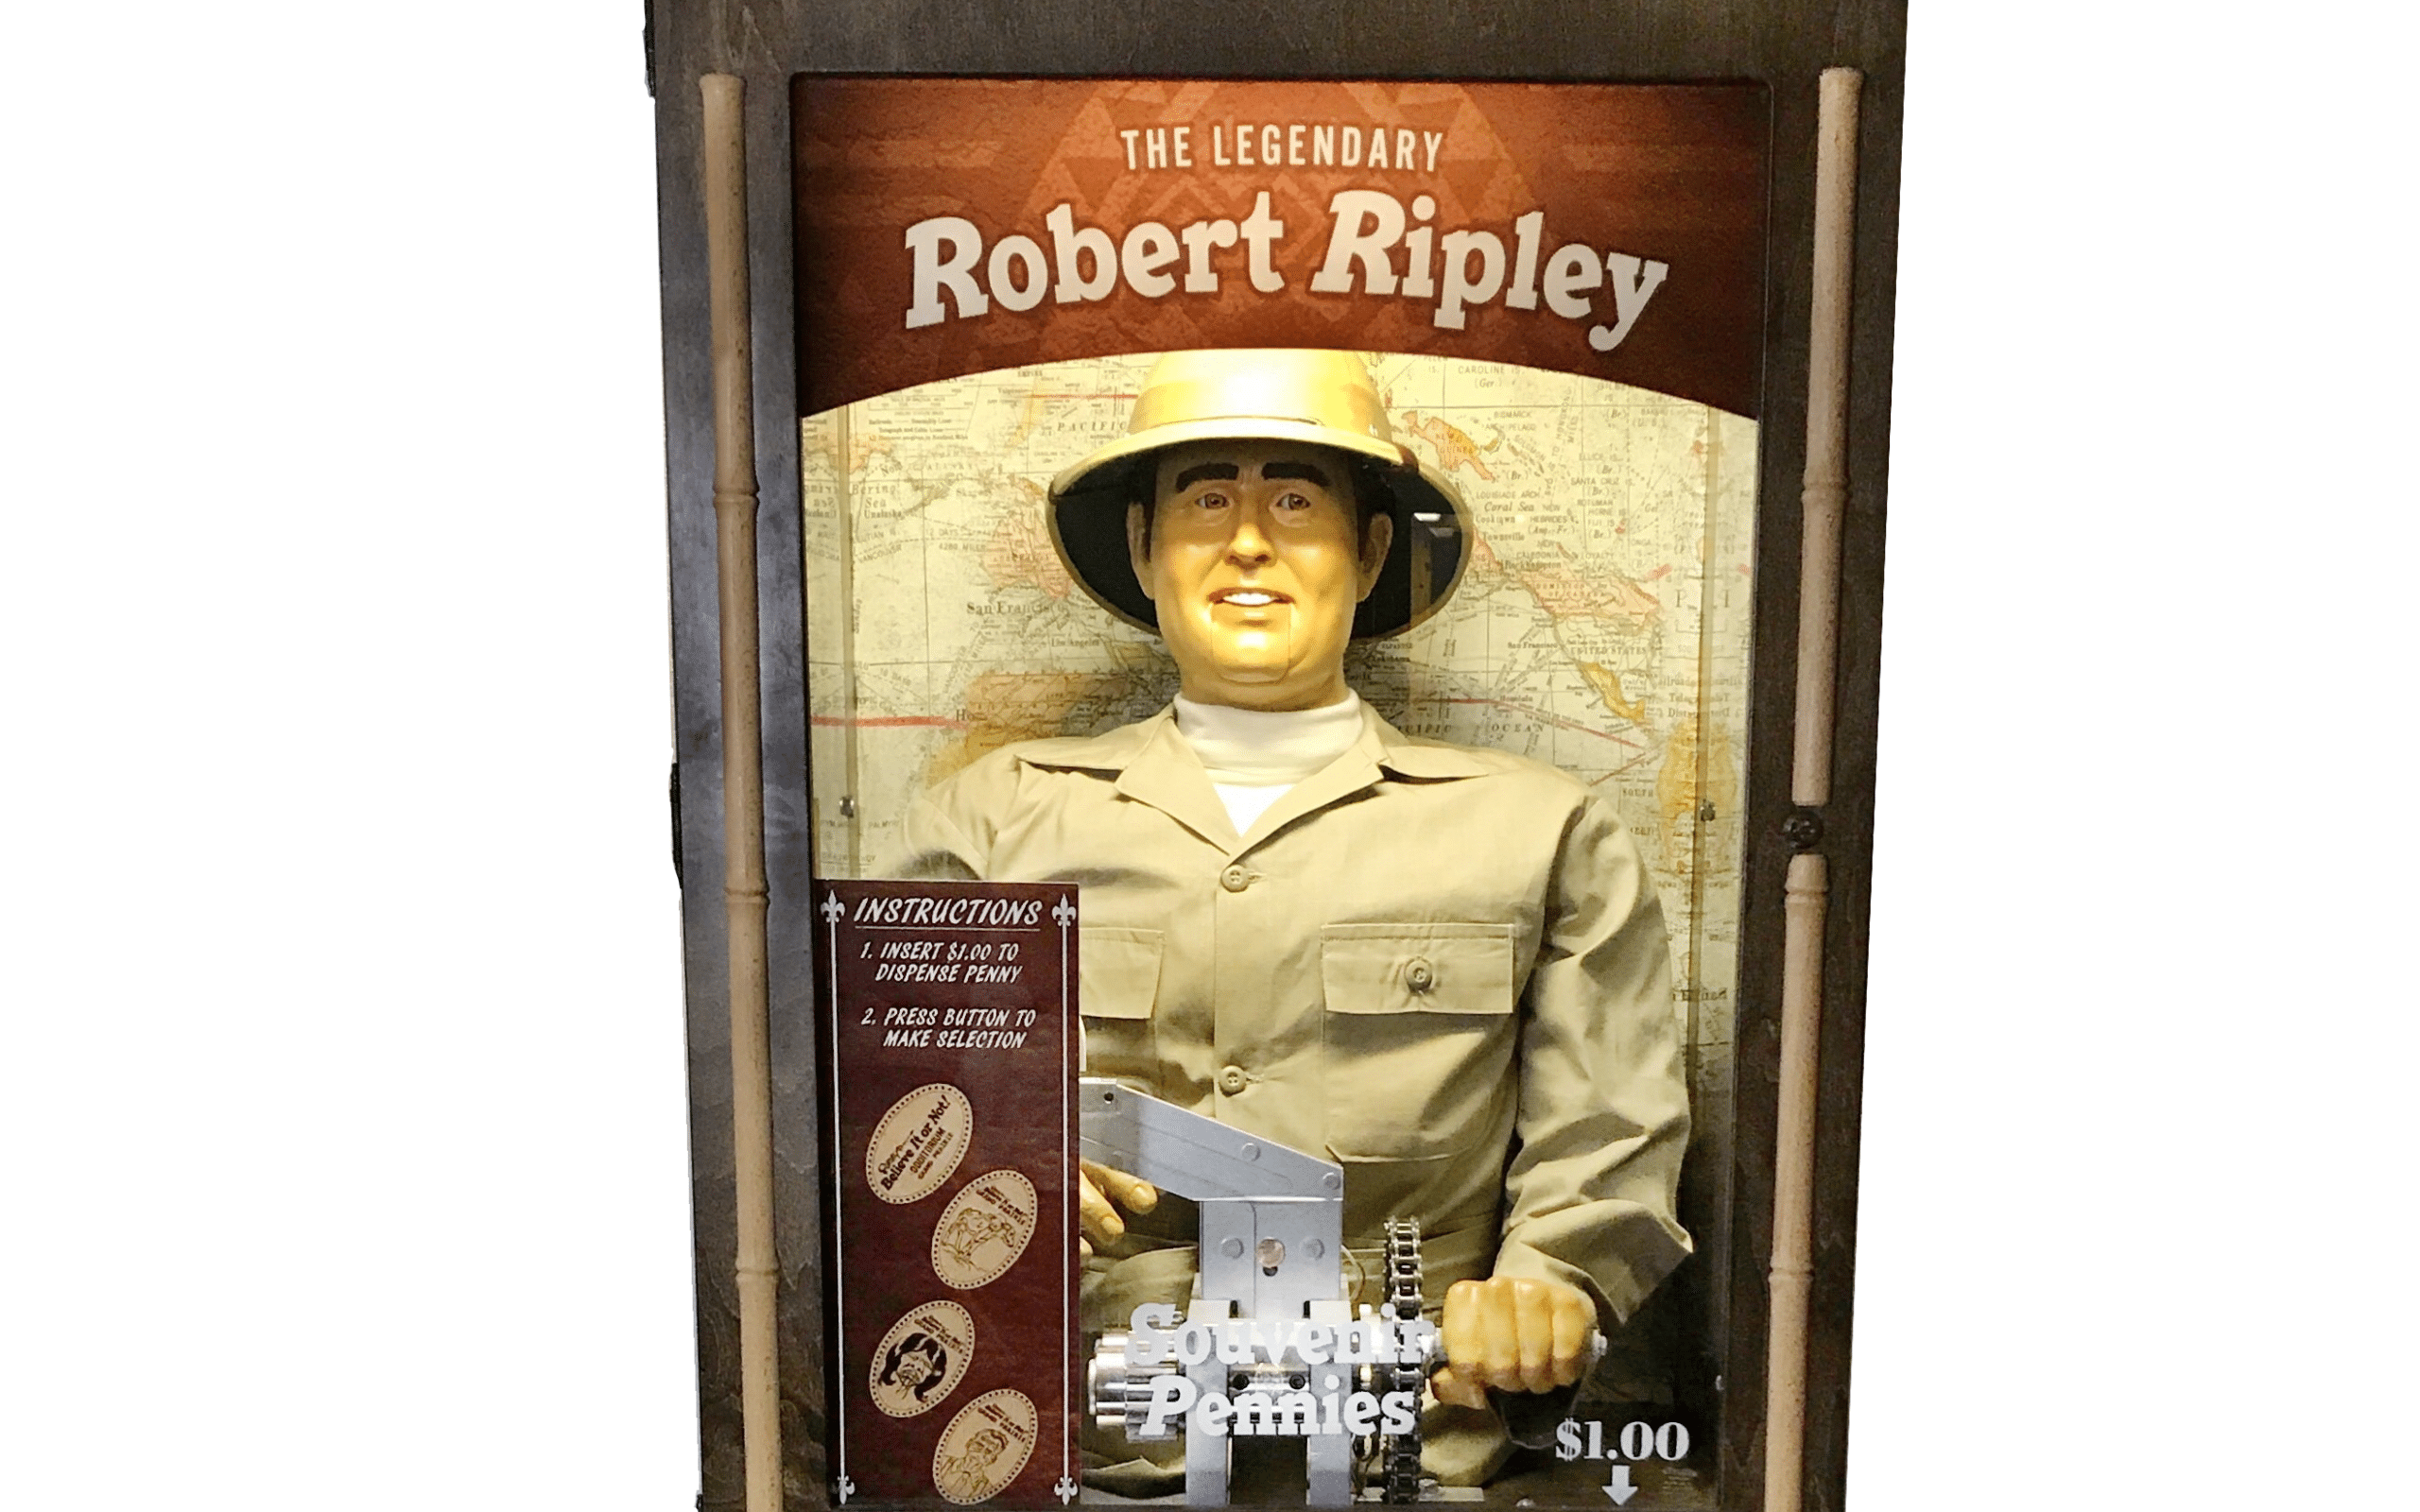 Robert Ripley Character Penny Press Machine